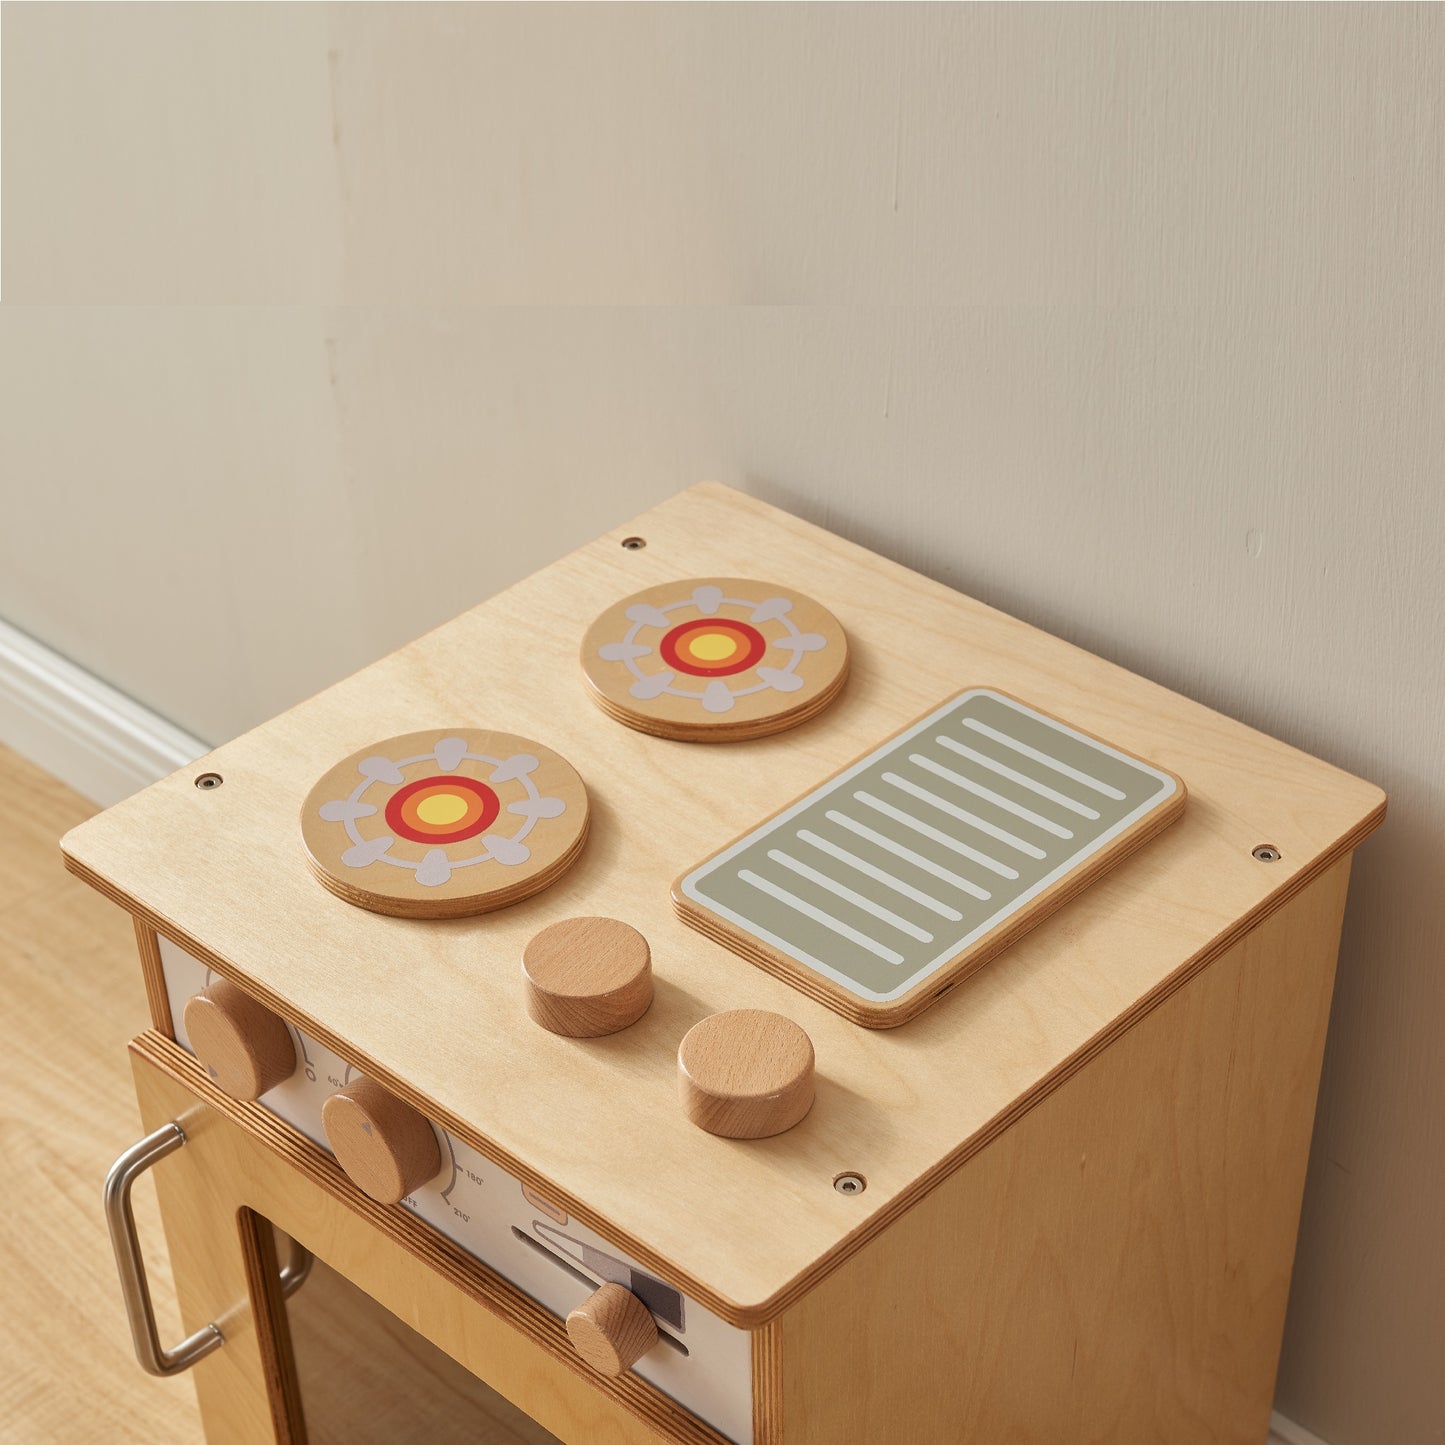 Masterkidz OSLO Kitchen Range 實木廚房玩具系列